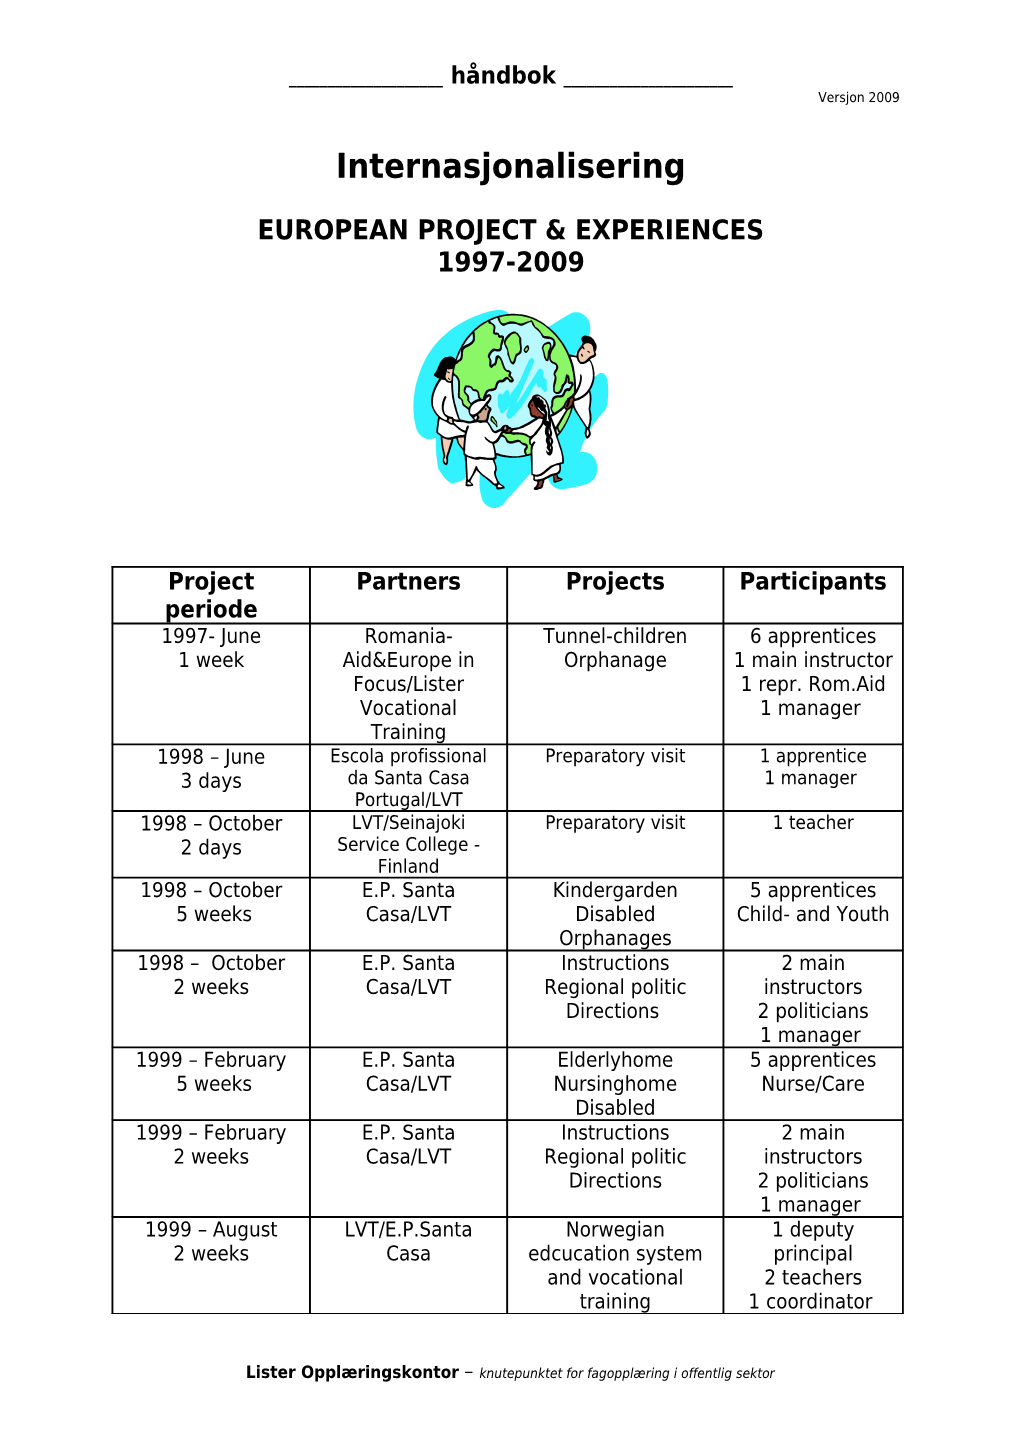 European Project & Experiences